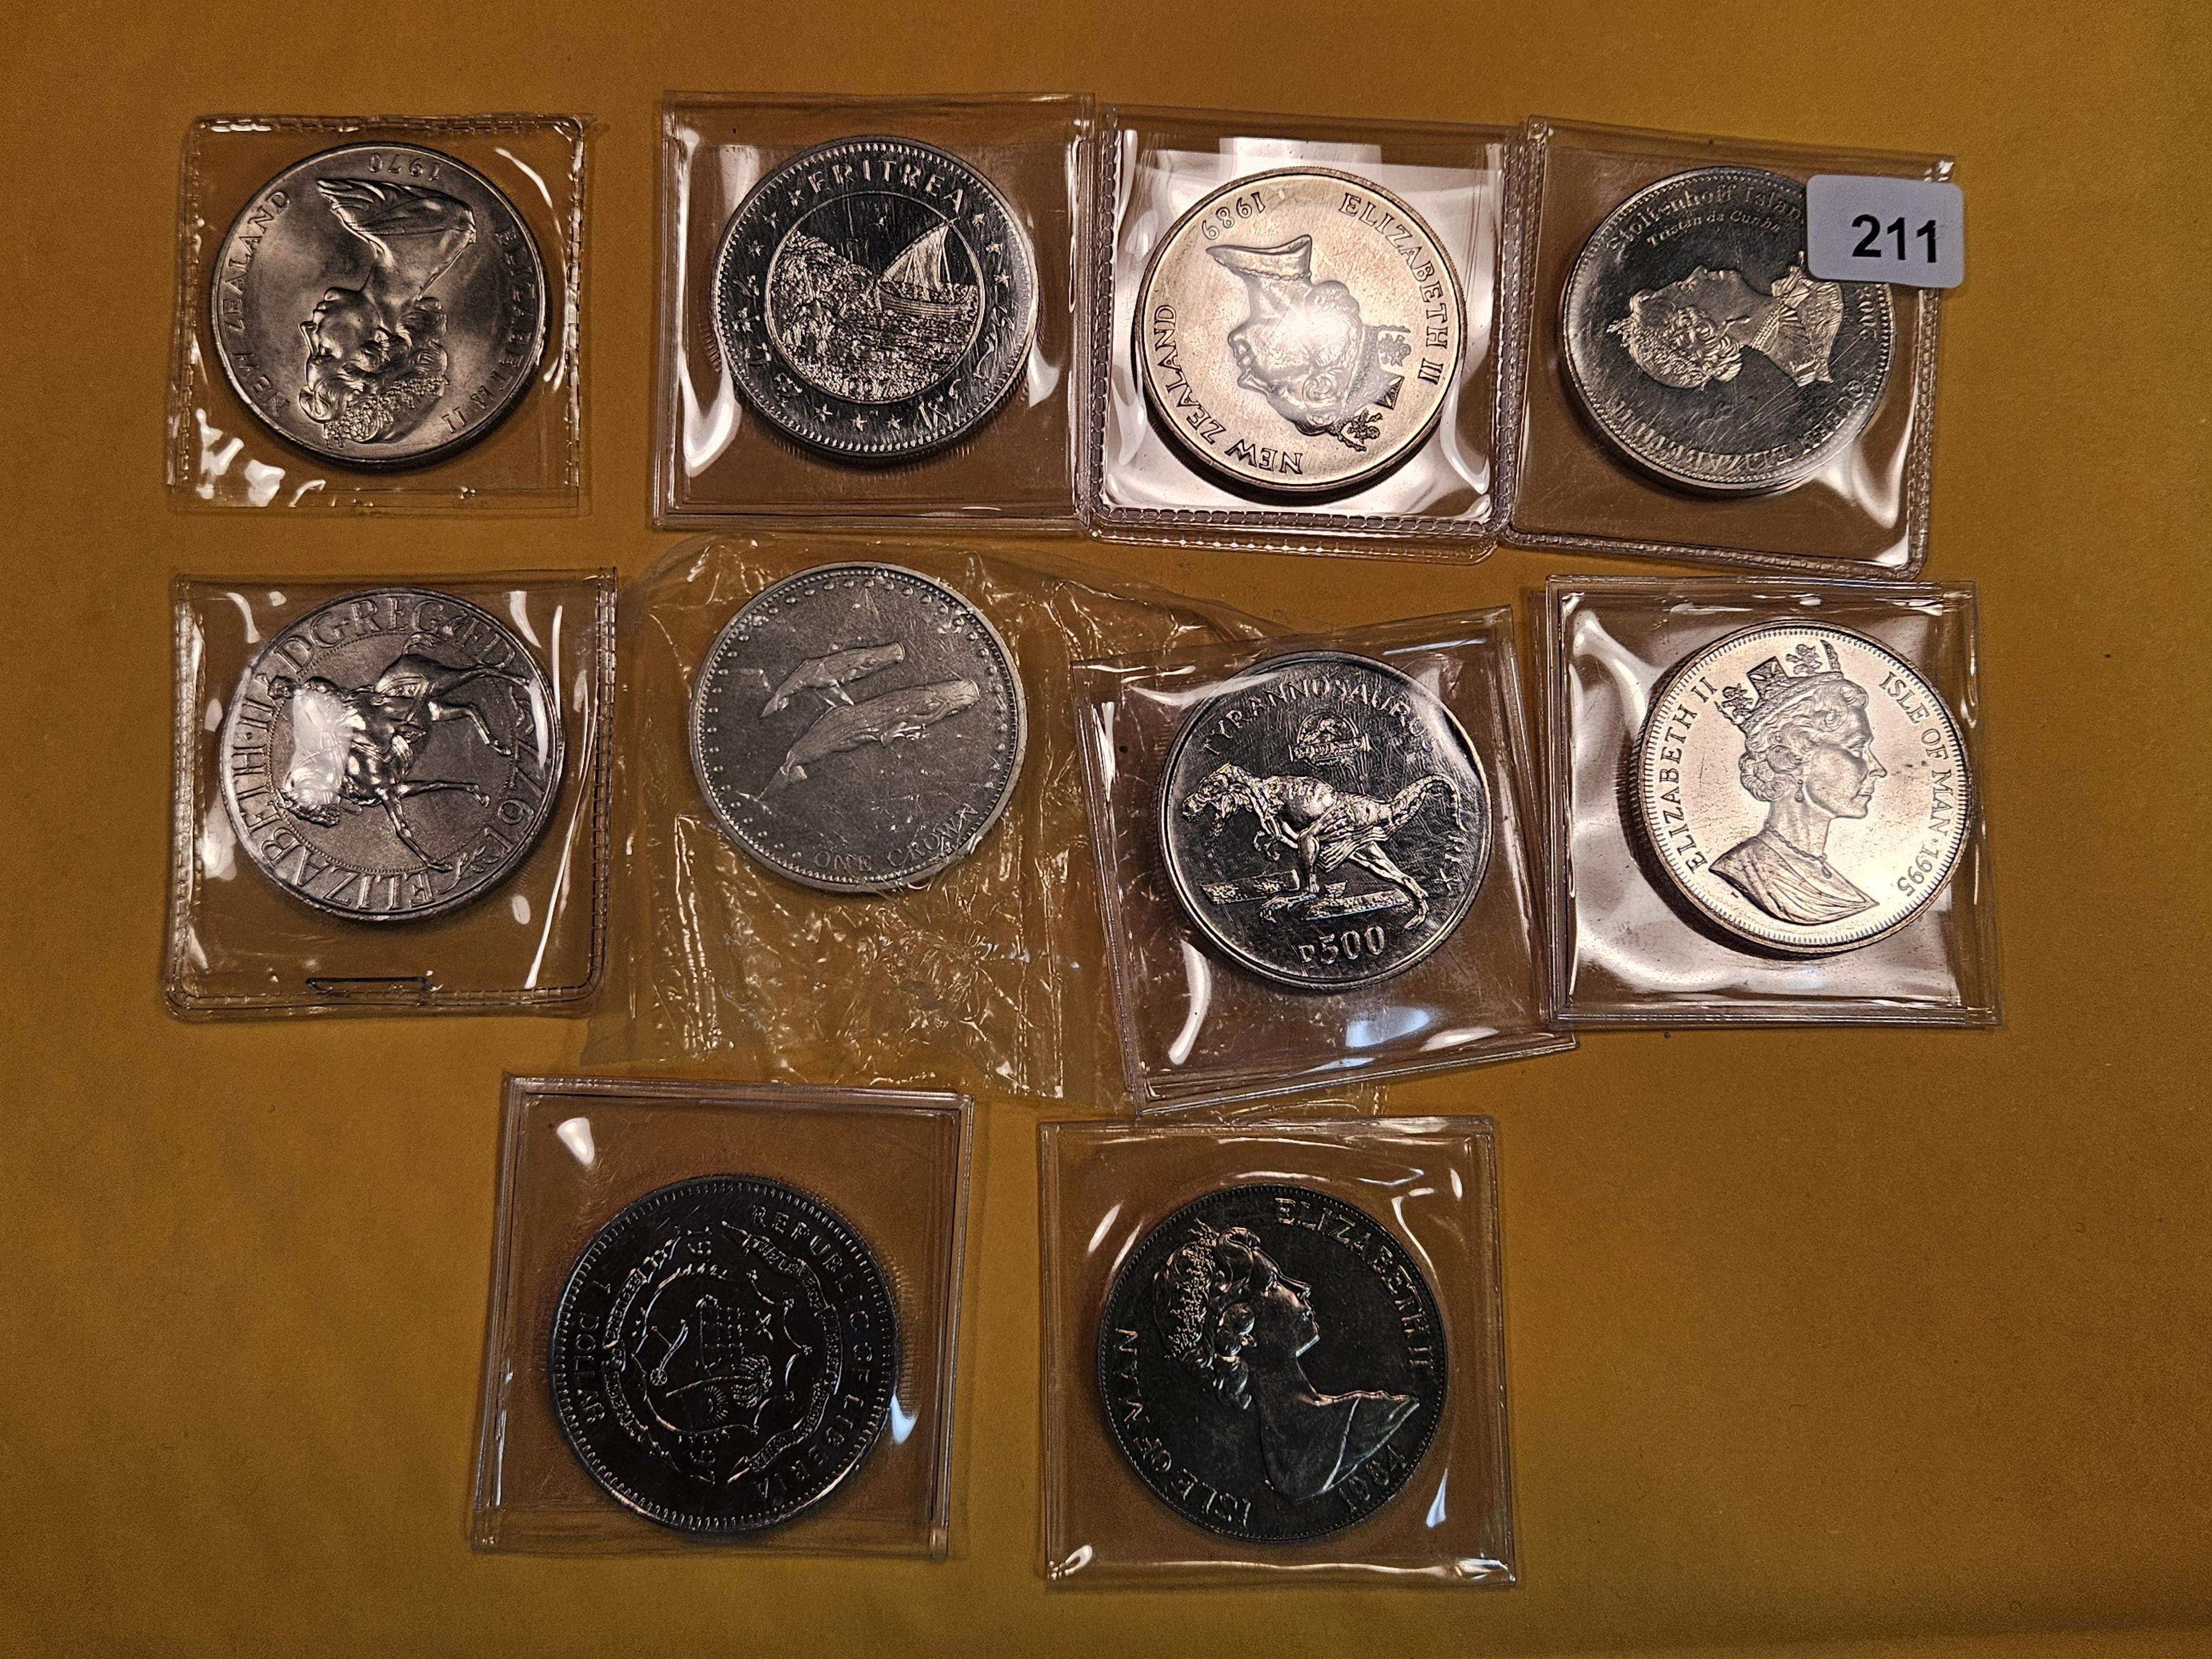 Ten Crown-Sized coins